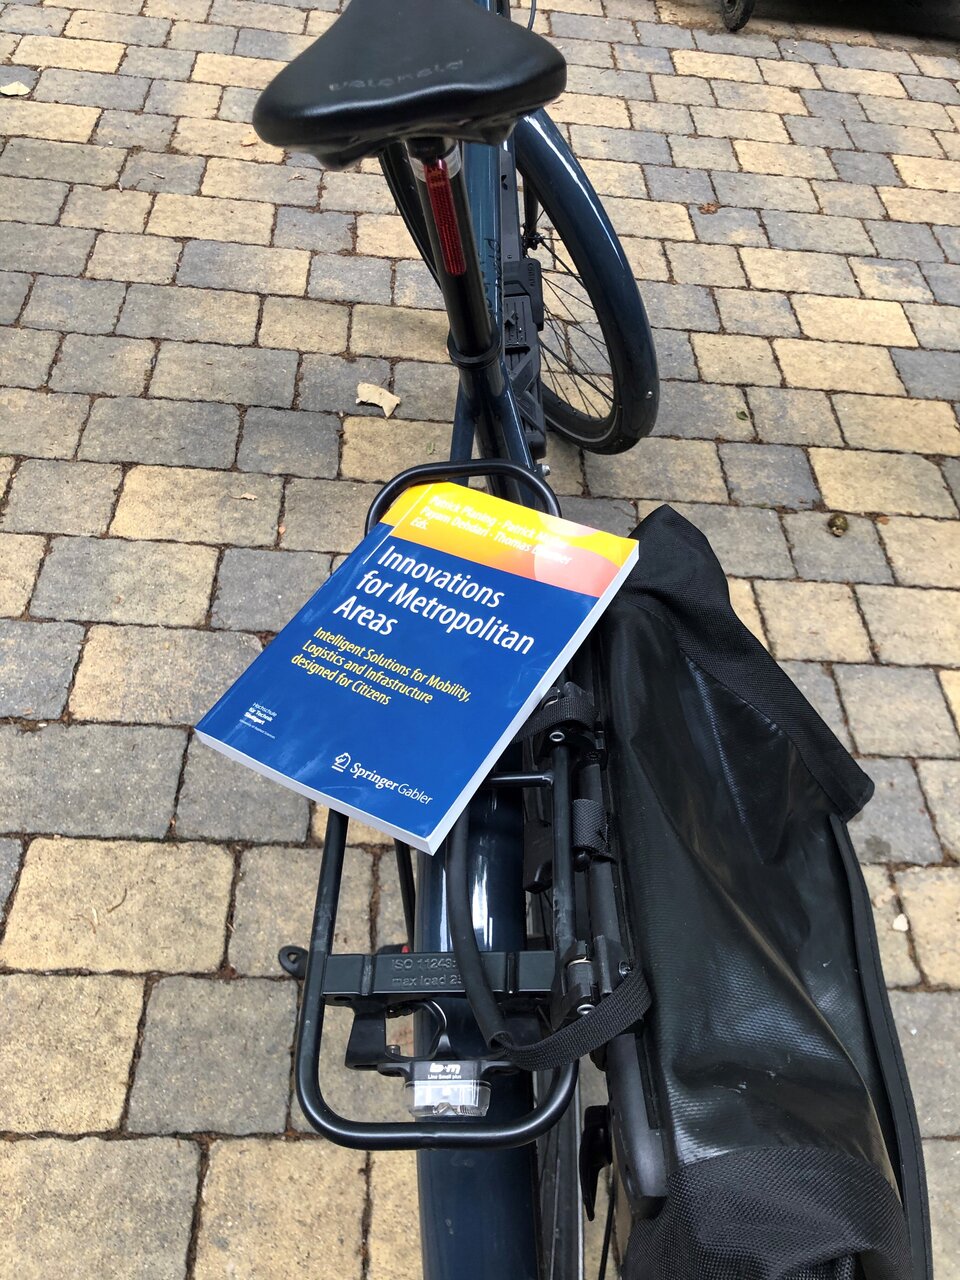 Buch liegt auf Fahrradgepäckträger